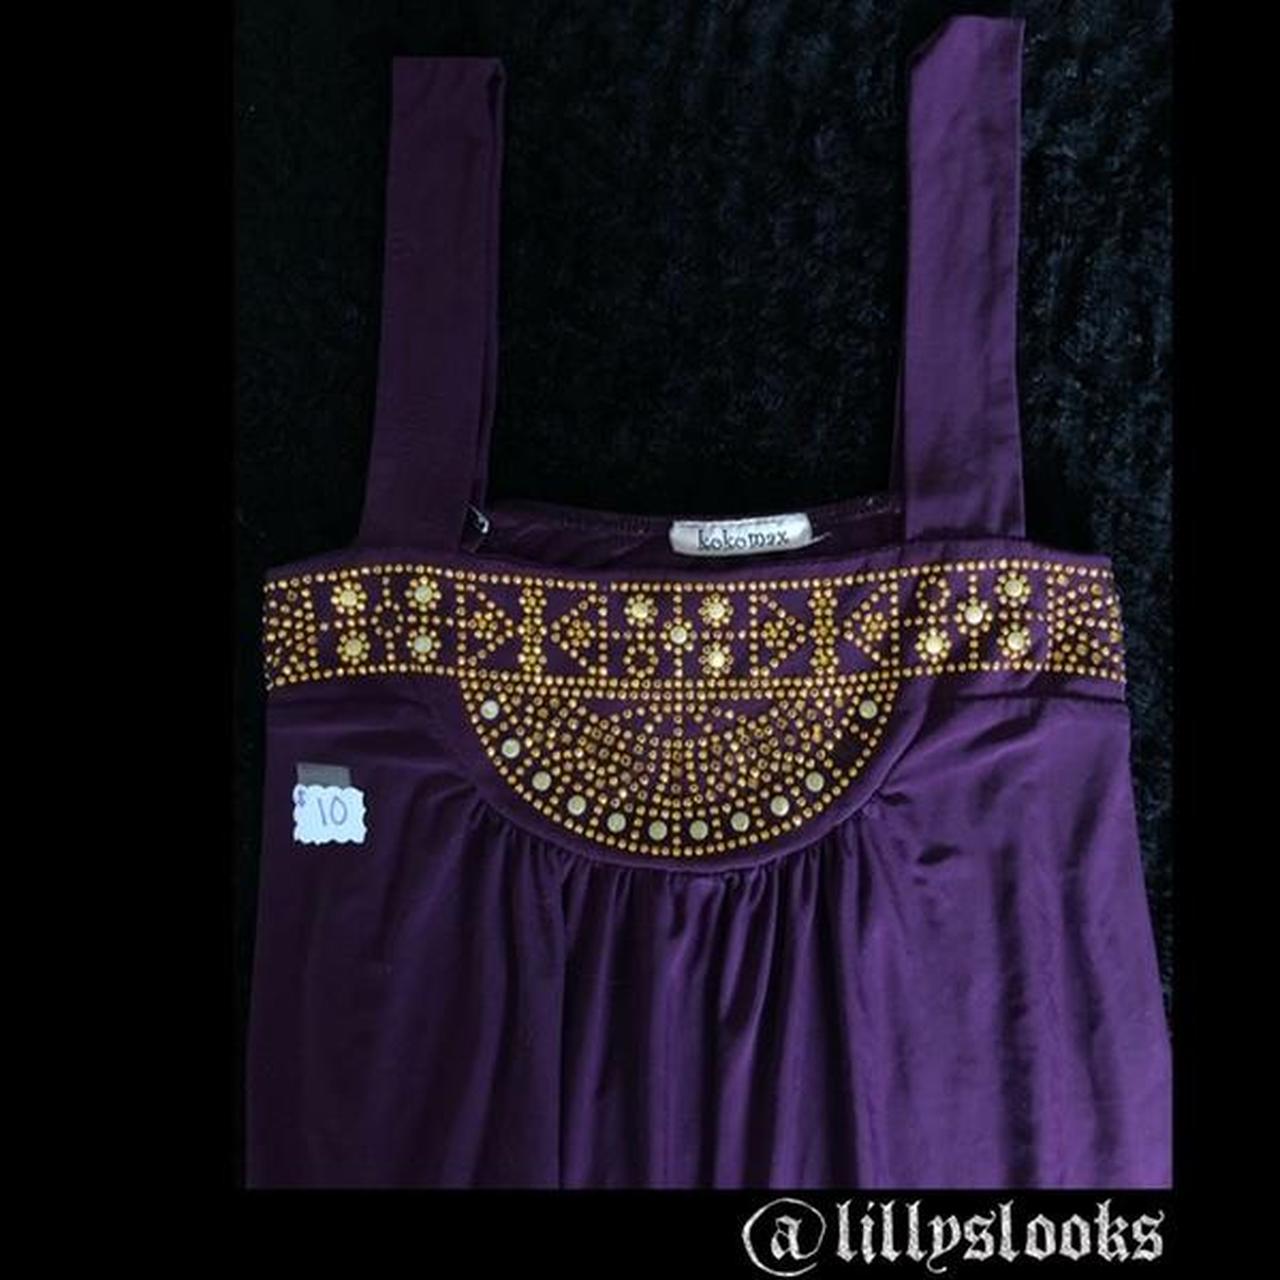 Product Image 3 - !
Purple Y2K kokomax Dress
~the first